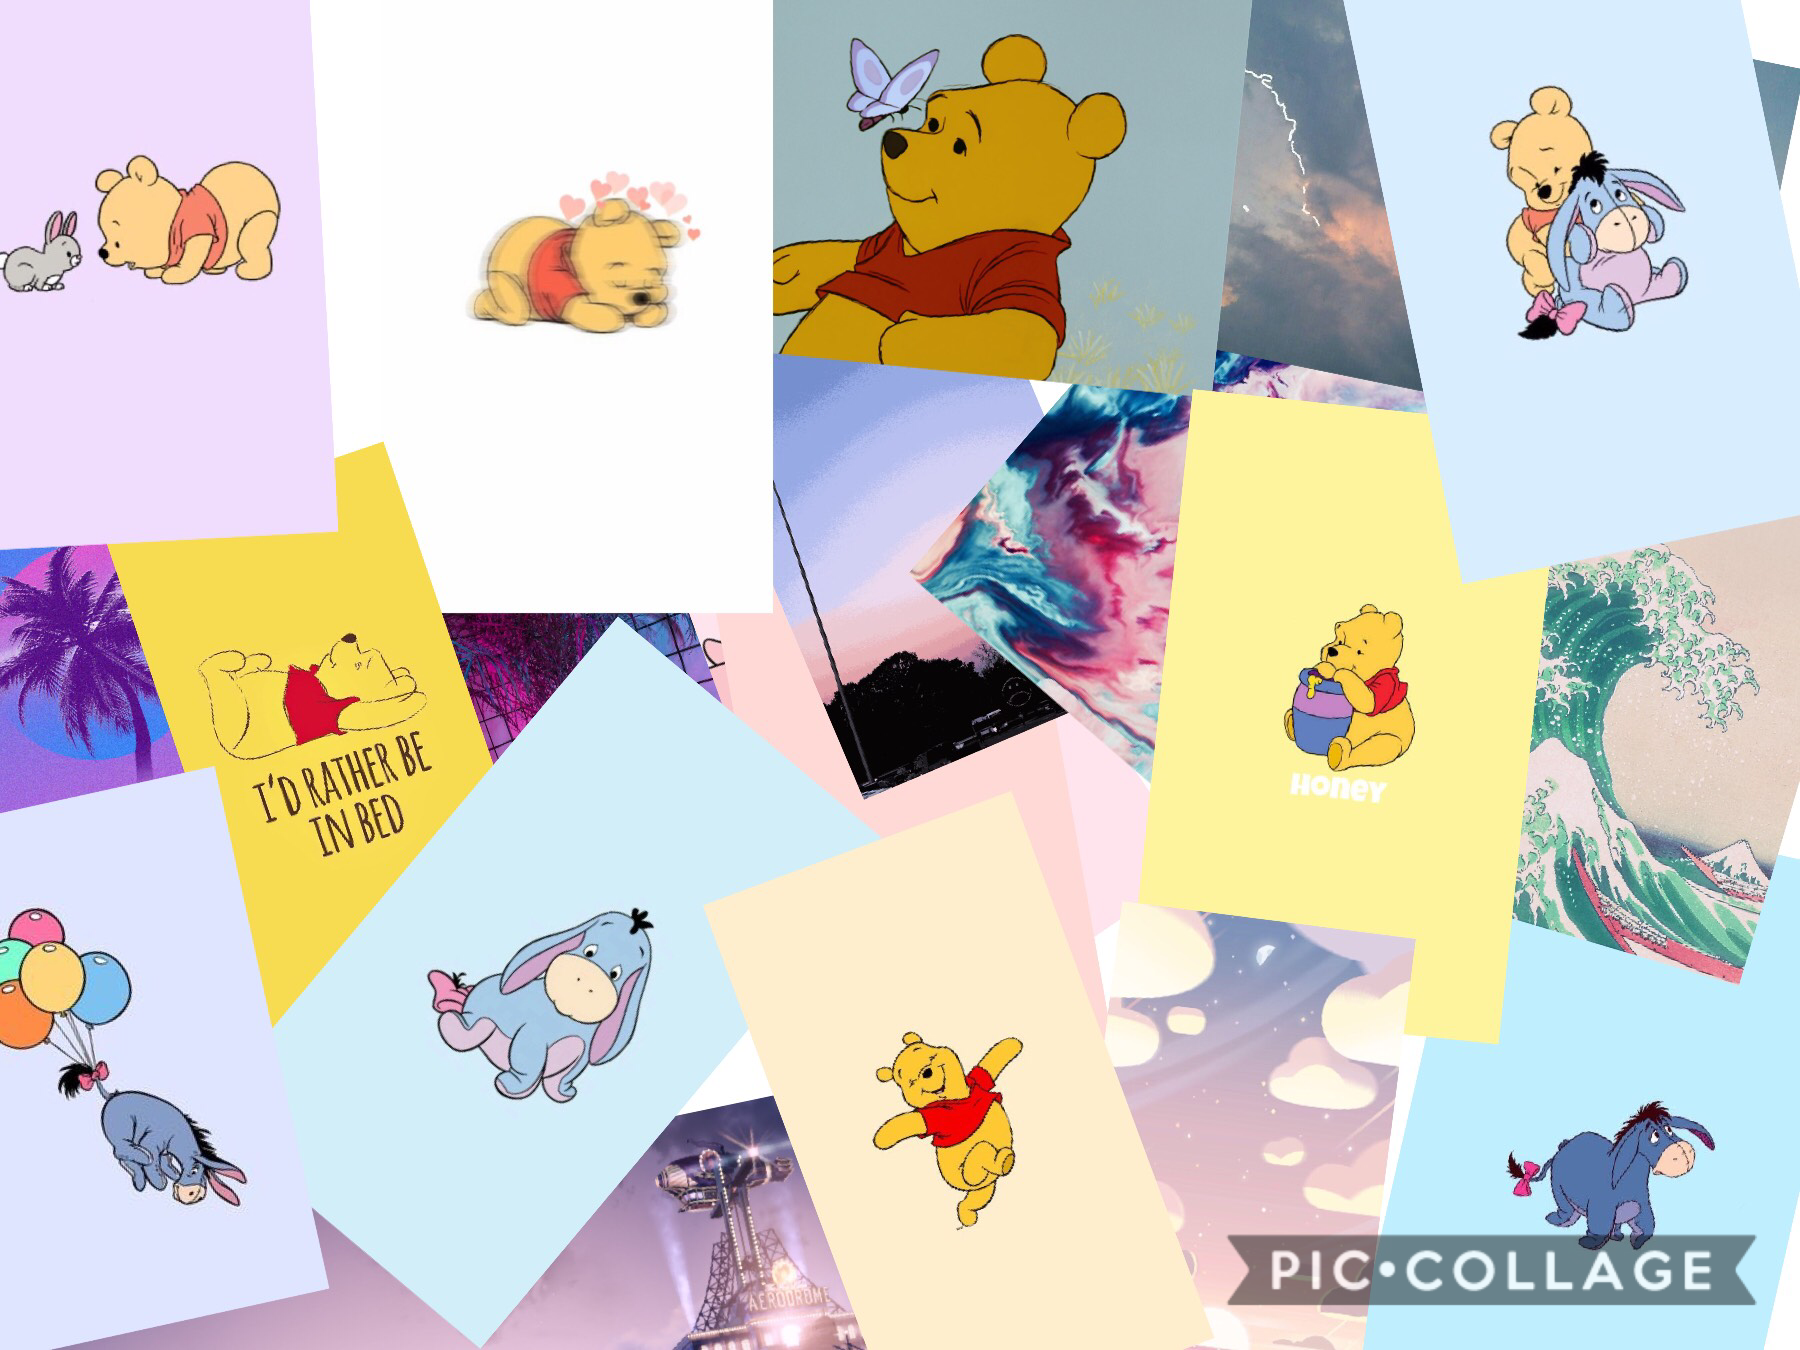 anyone else like winner the Pooh and eeyore? just me...?